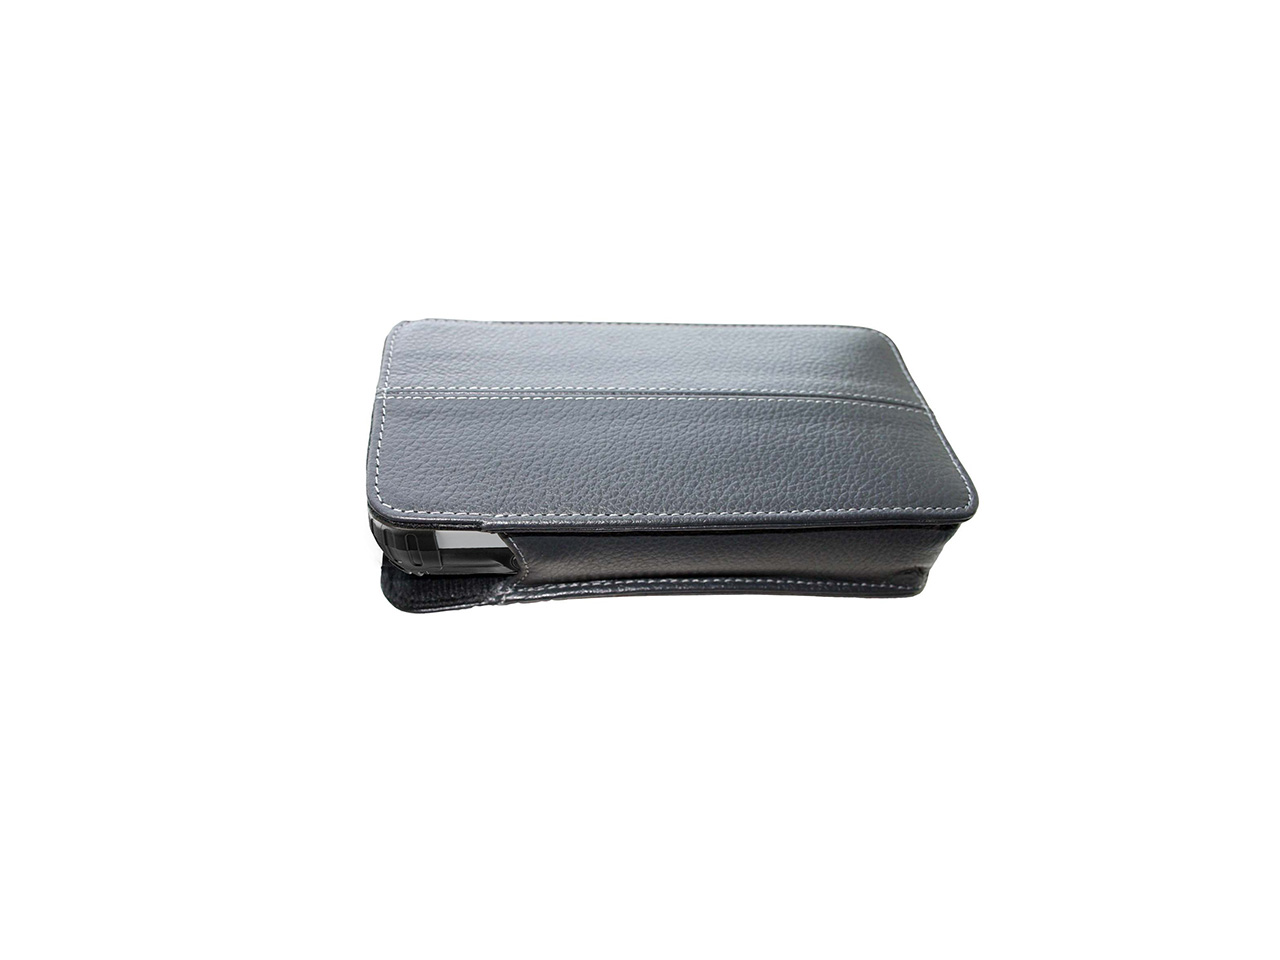 NX-2020-Carry case.jpg